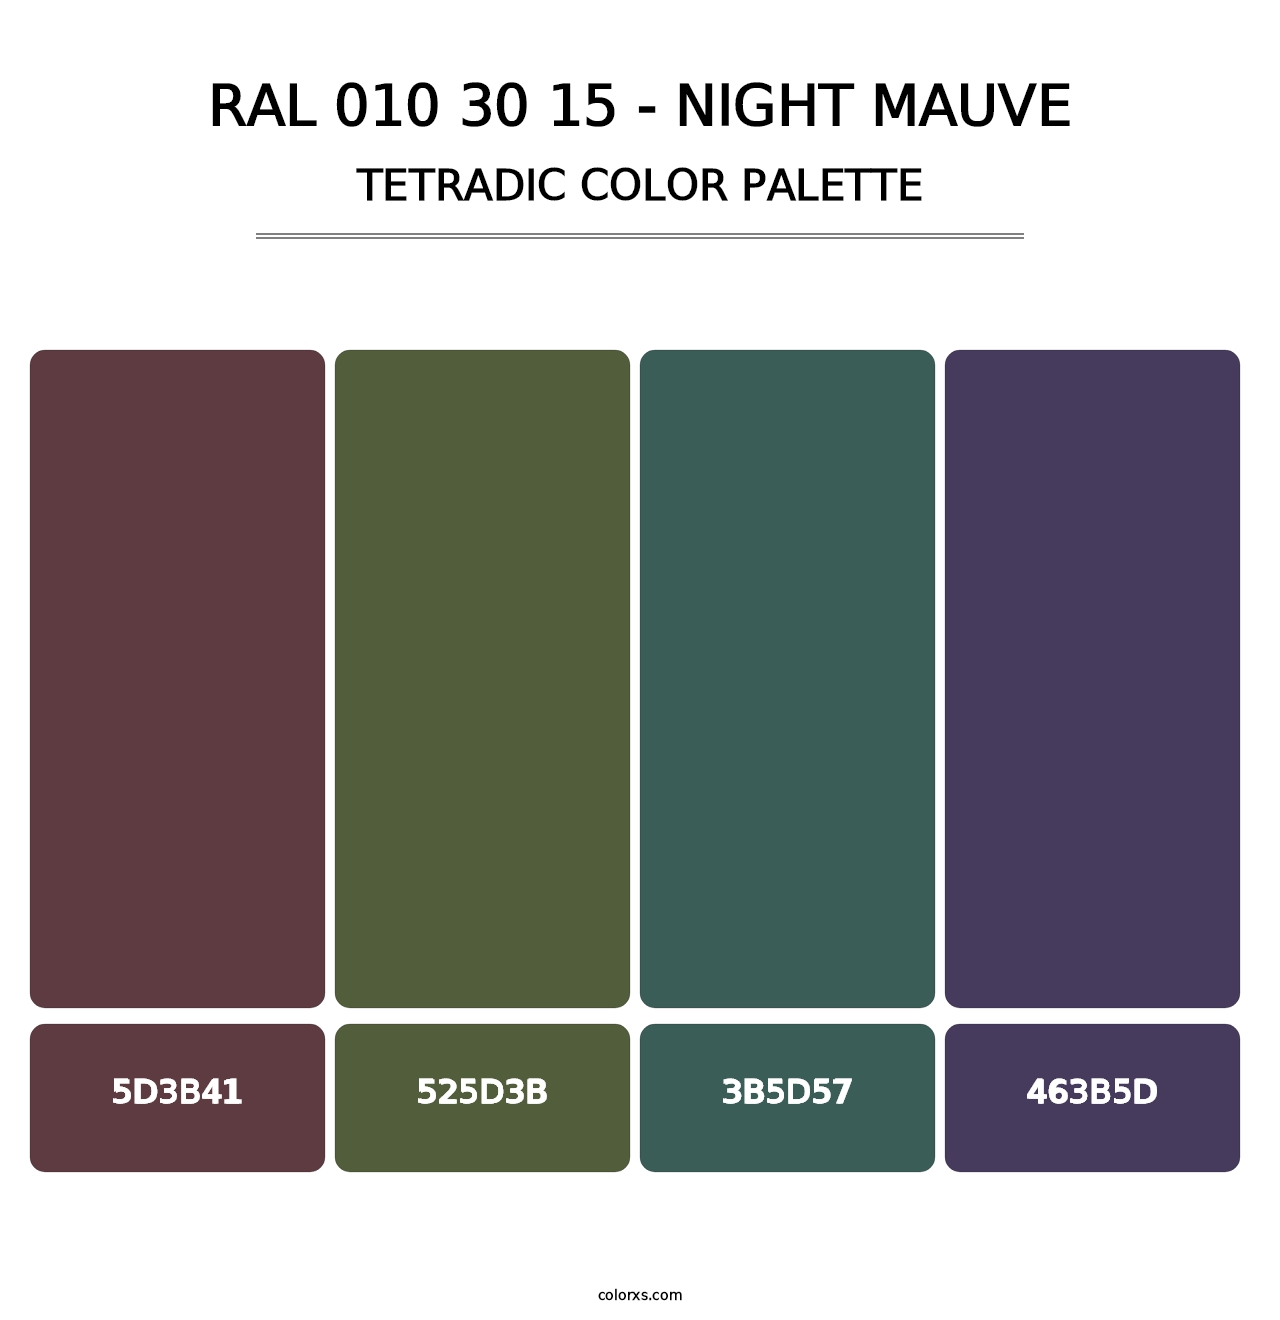 RAL 010 30 15 - Night Mauve - Tetradic Color Palette